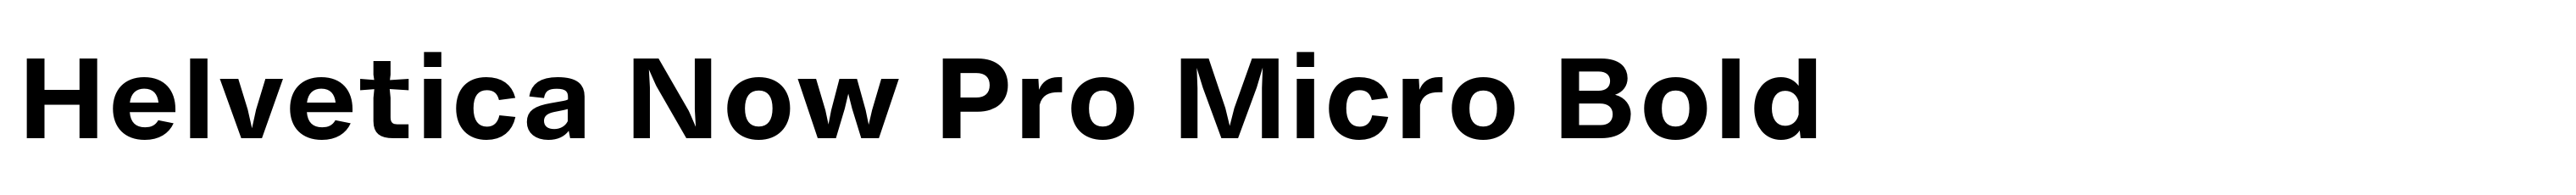 Helvetica Now Pro Micro Bold